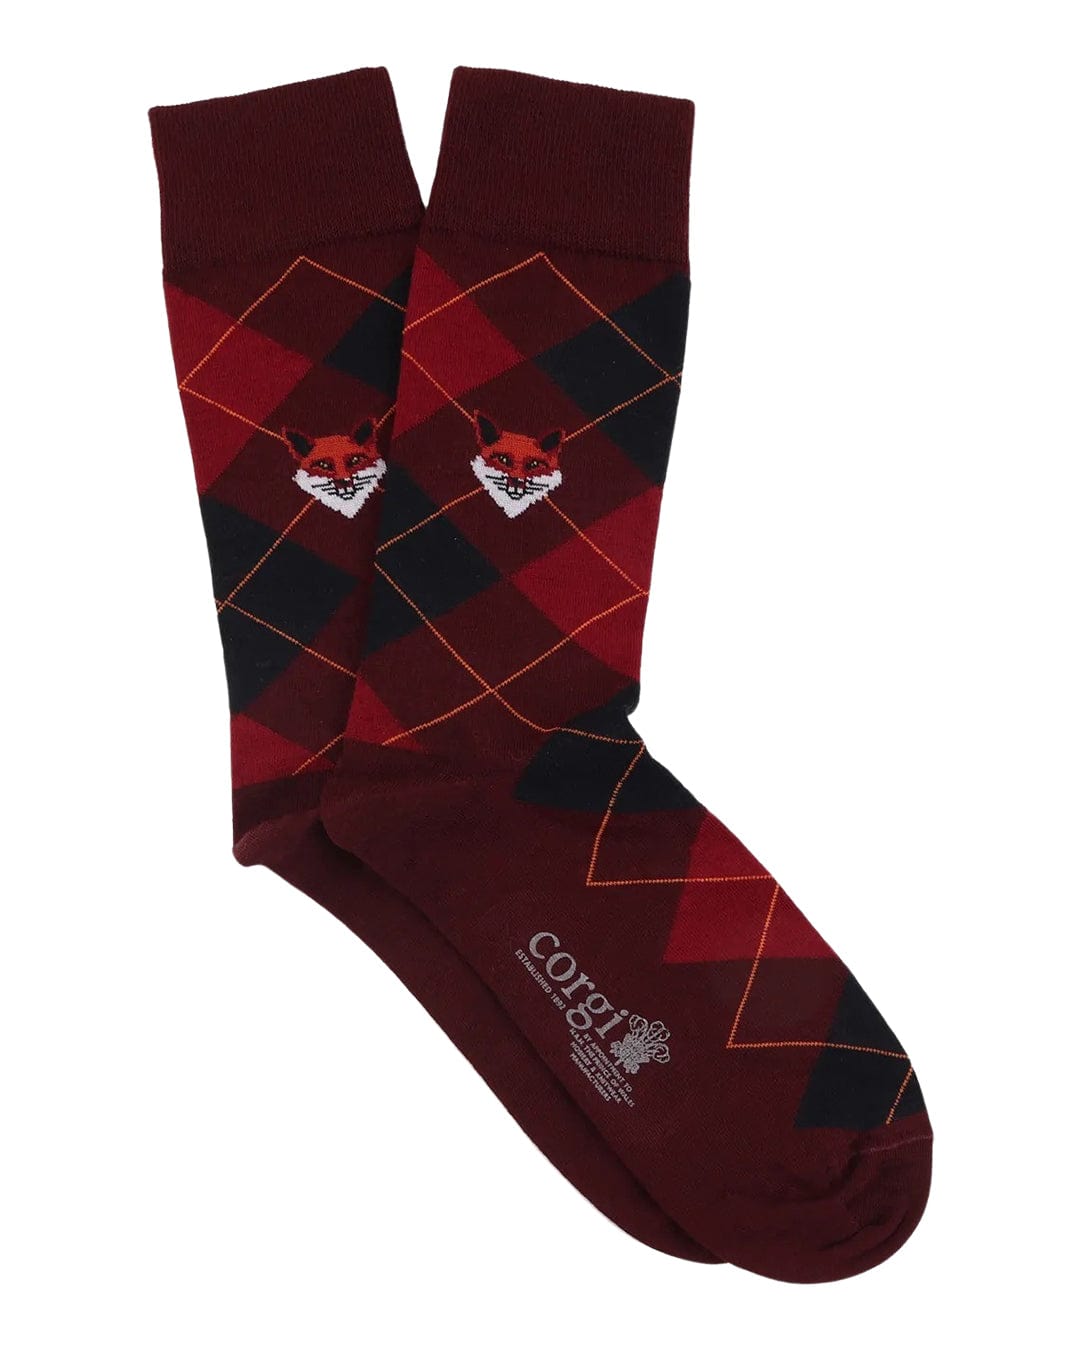 Corgi Socks Corgi Red Argyle Fox Merino Wool Socks